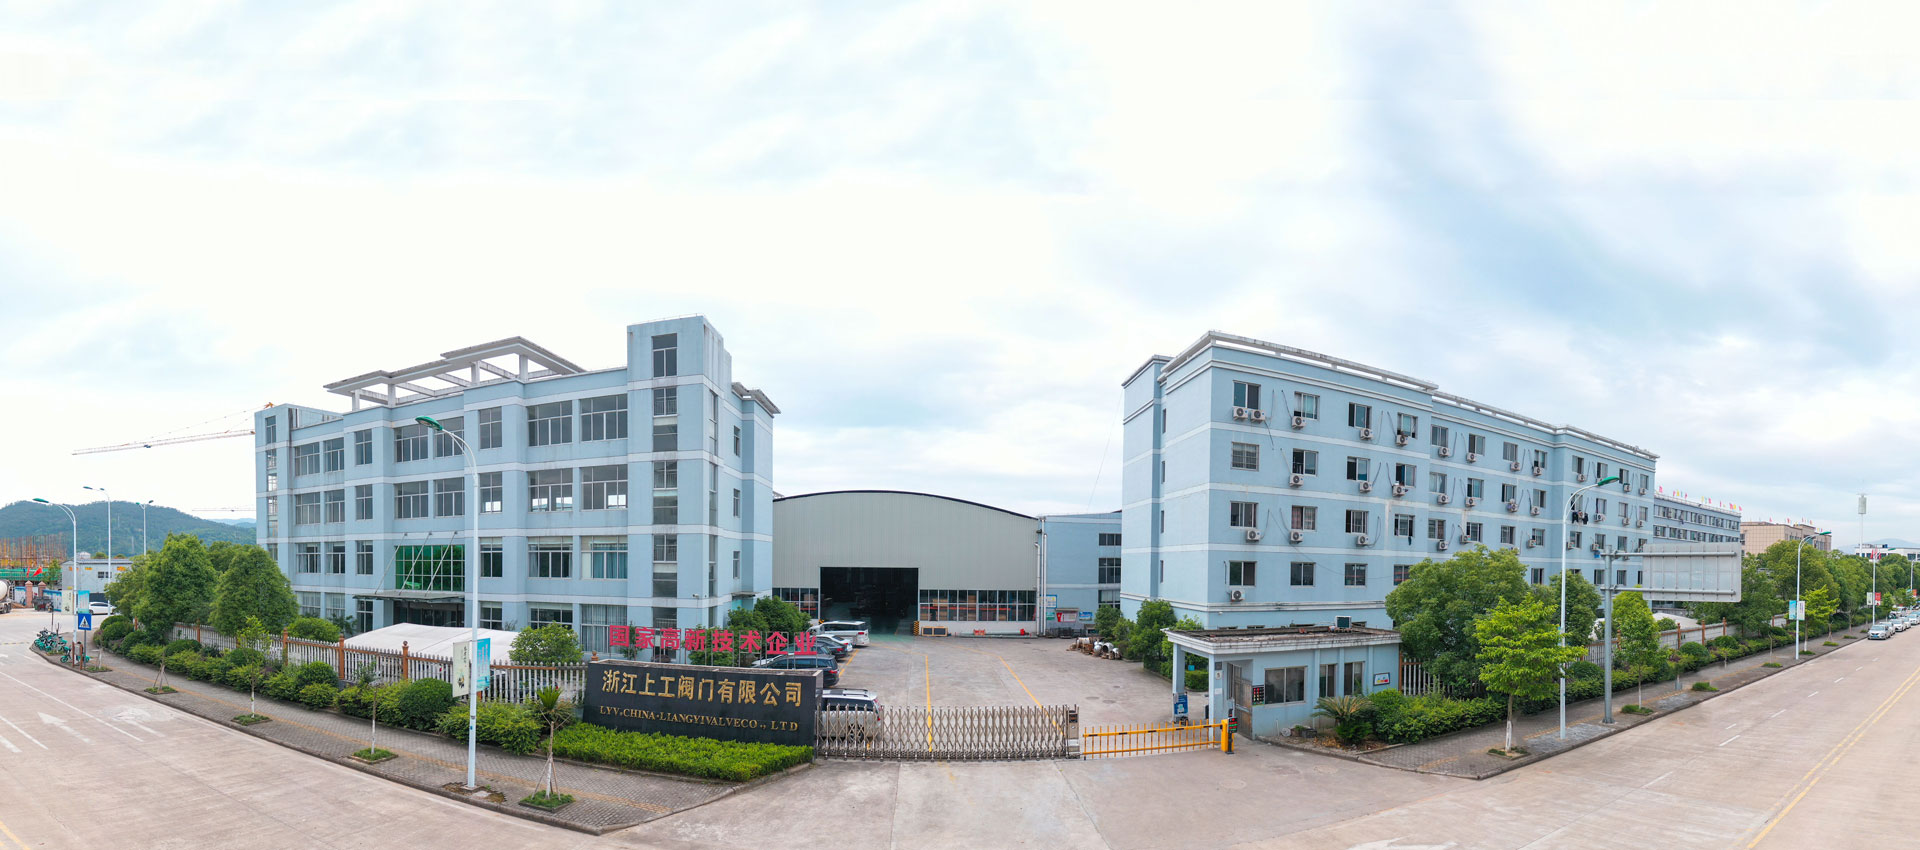 Tá Zhejiang Liangyi Valve Co., Ltd.